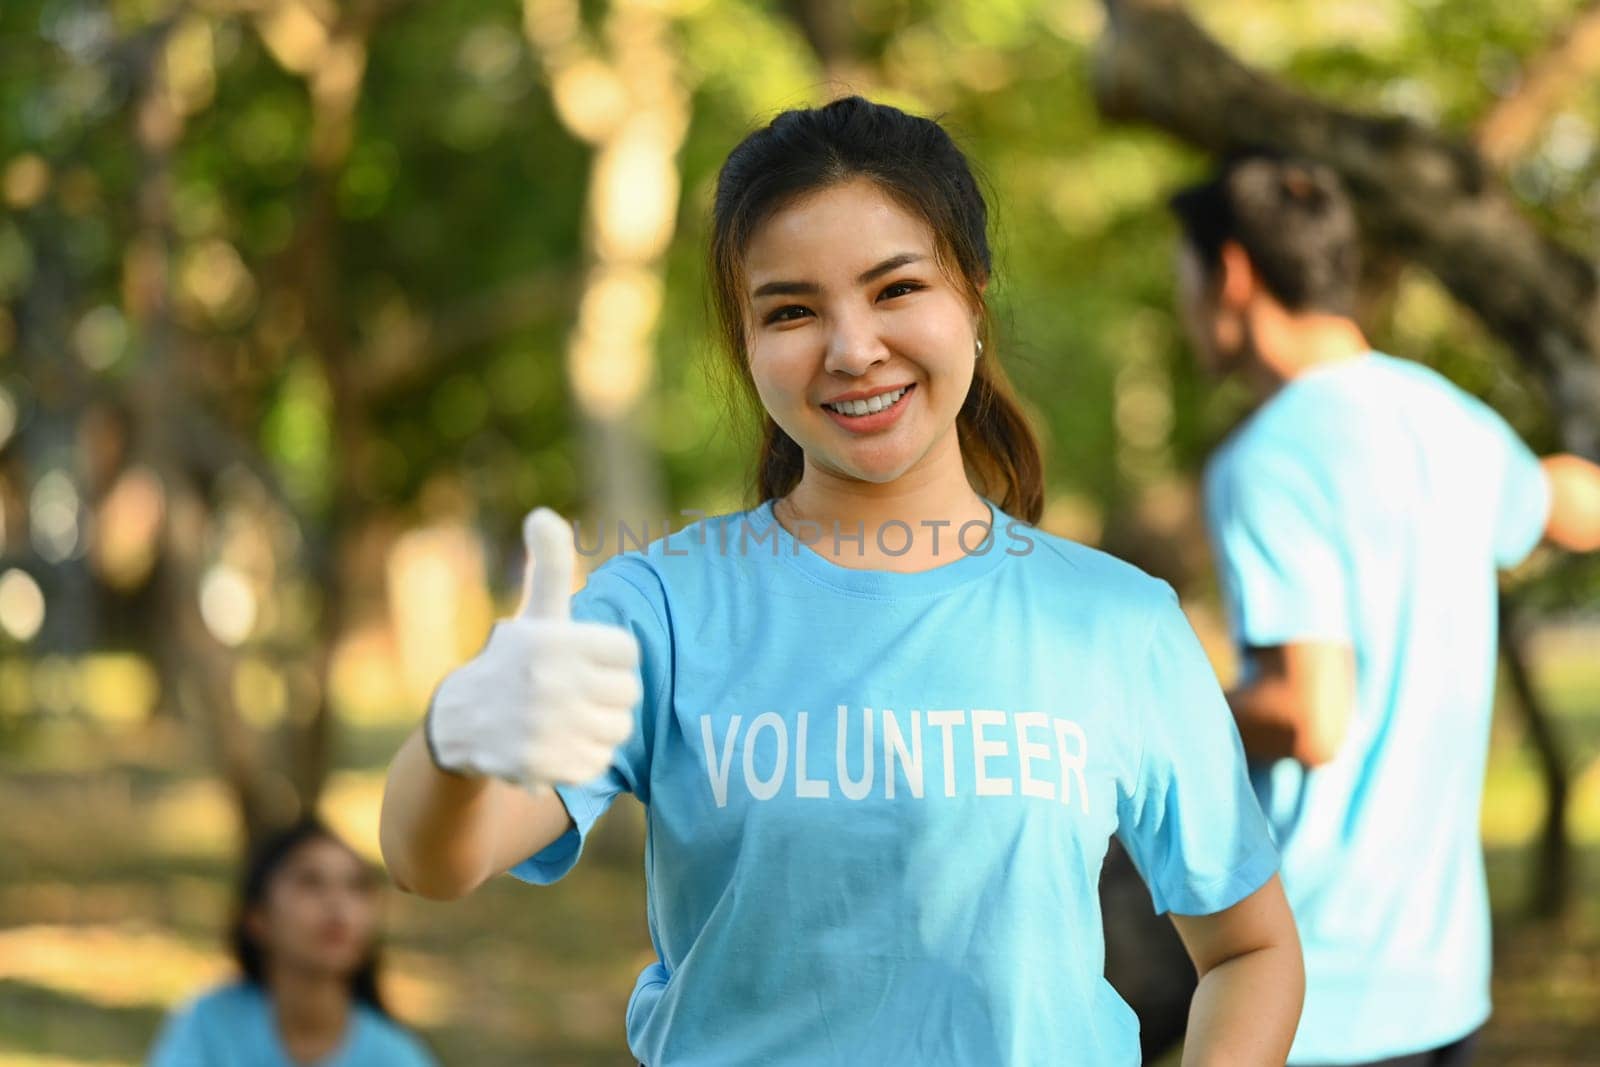 Beautiful Asian female activist in volunteer t-shirt showing thumbs up standing outdoor.